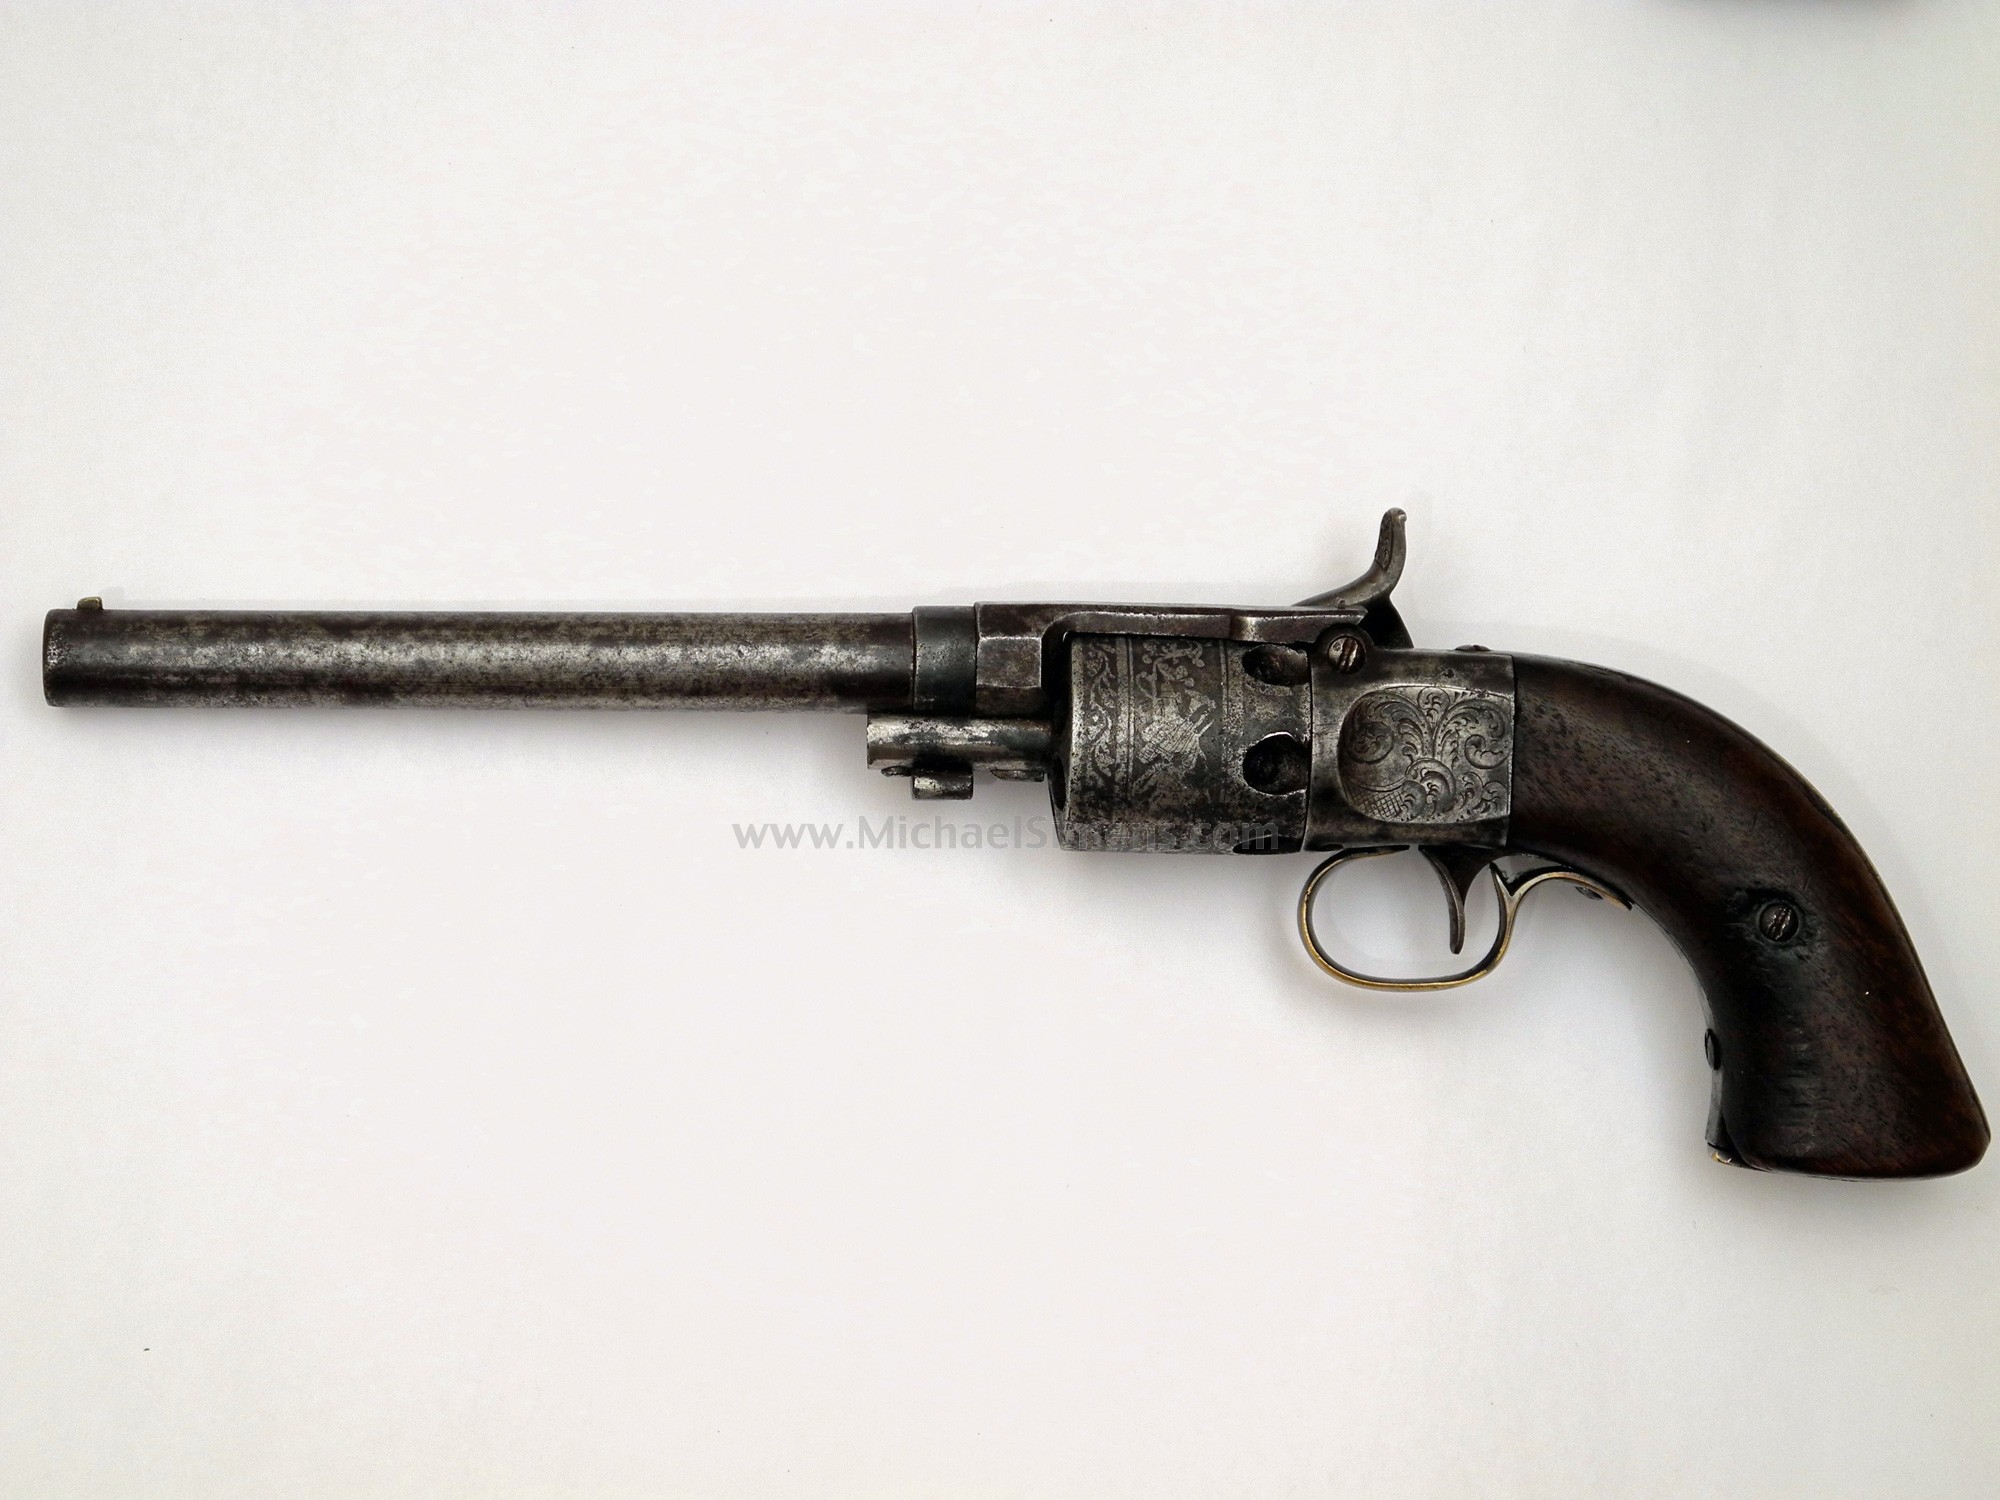 ANTIQUE HANDGUNS, REVOLVERS, PISTOLS FOR SALE - Antique Gun Appriasers